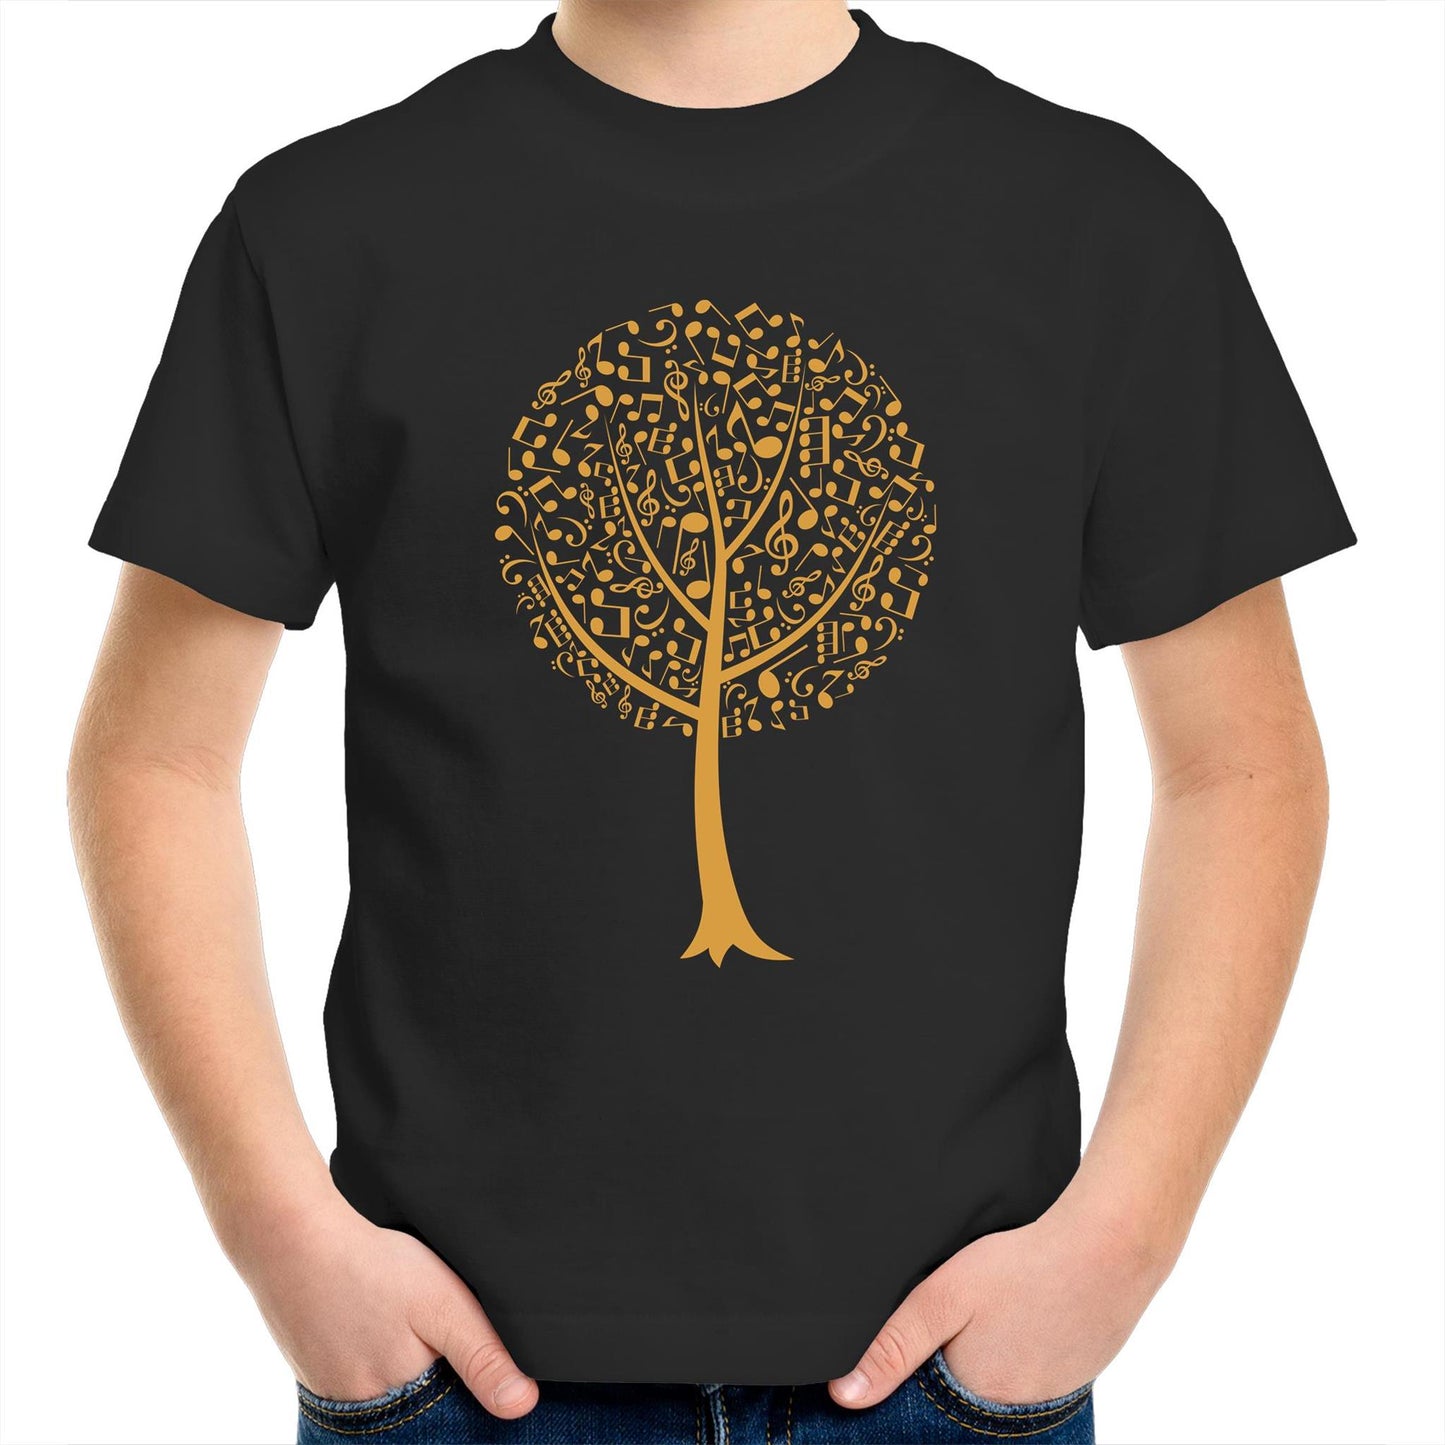 Music Tree - Kids Youth Crew T-Shirt Black Kids Youth T-shirt Music Plants